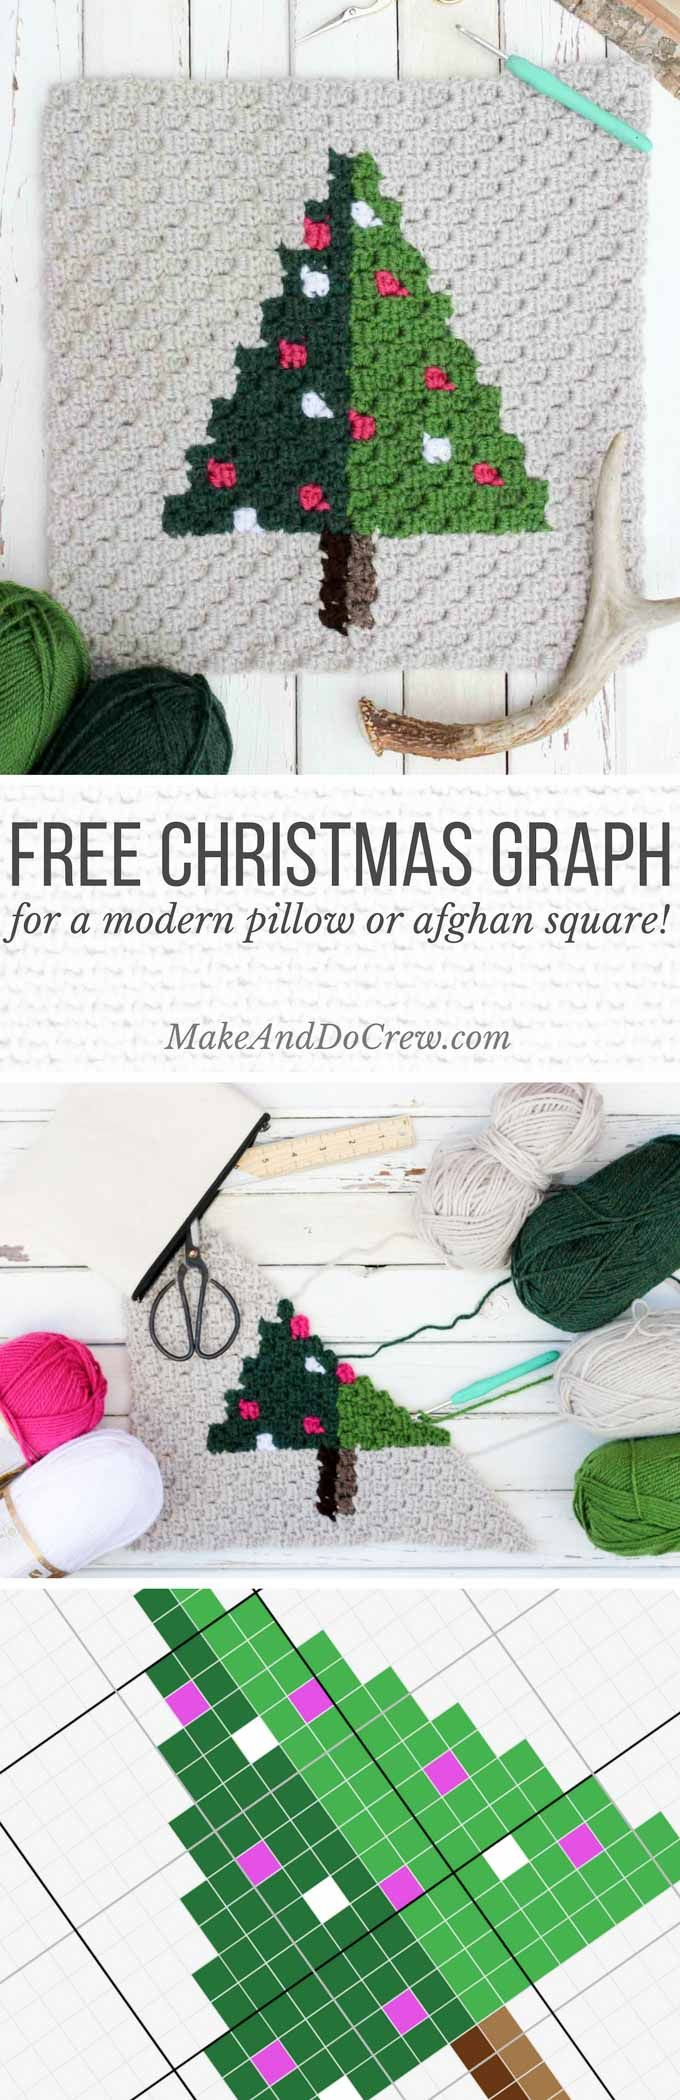 Free Printable Christmas Crochet Patterns – Festival Collections - Free Printable Christmas Crochet Patterns